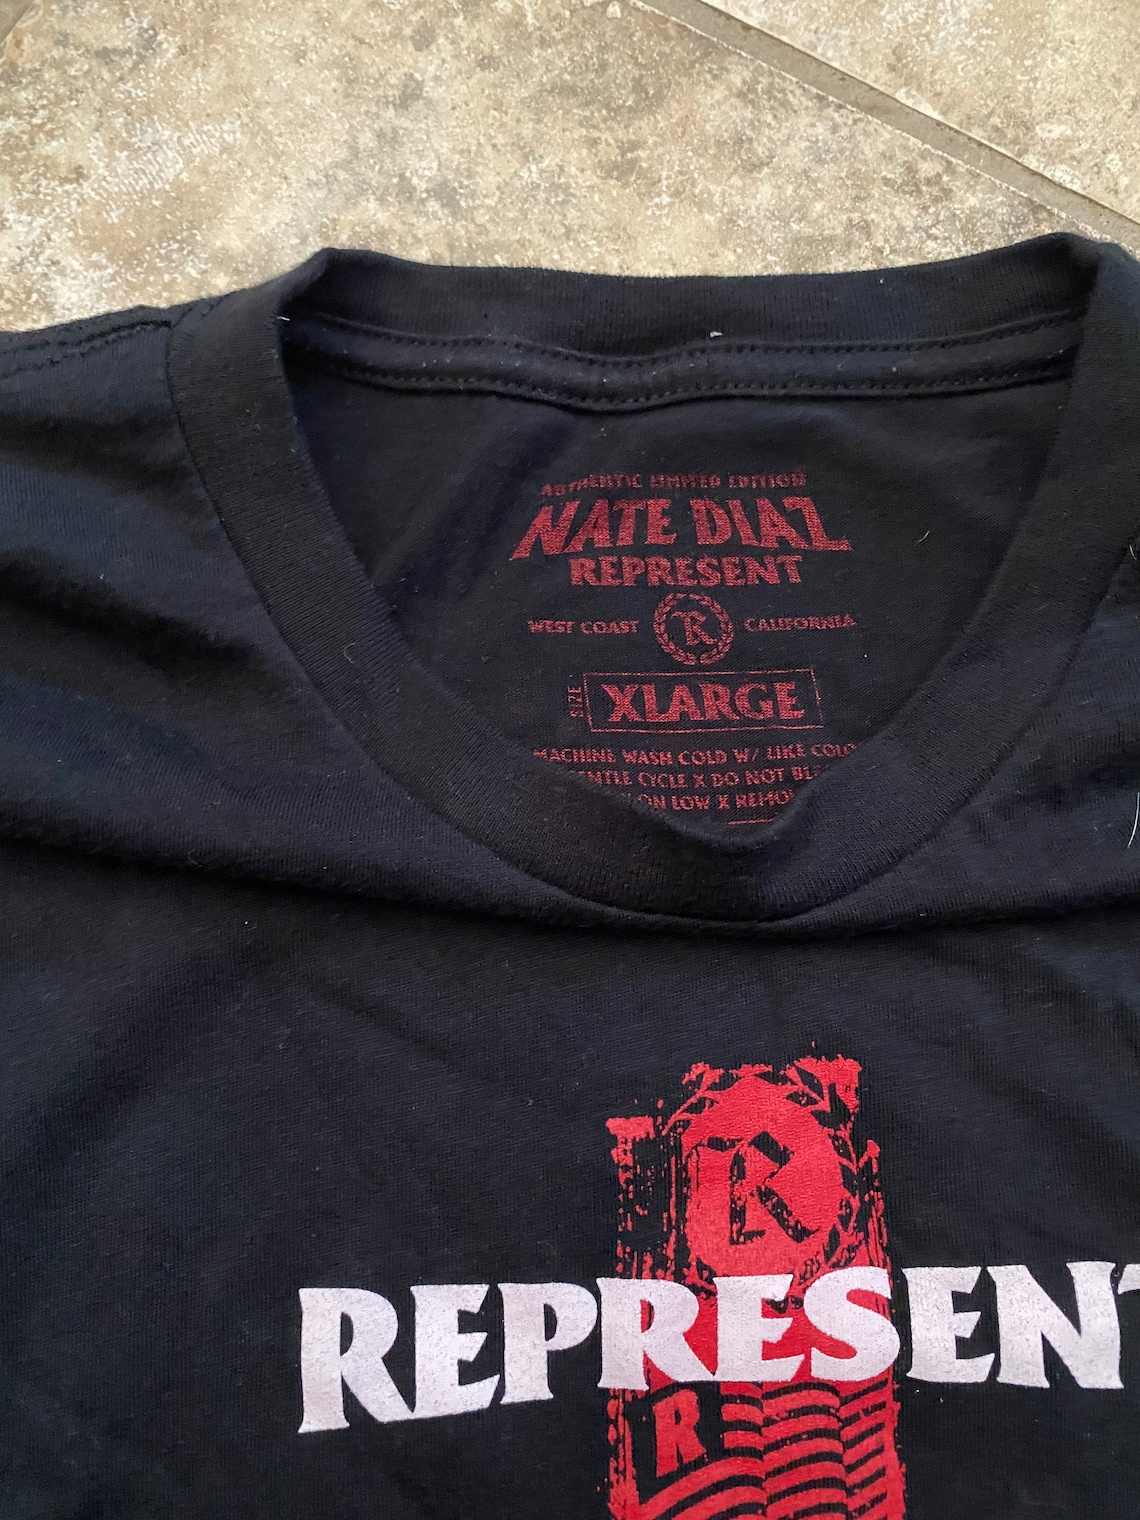 Nate Diaz Represent Limited Edition XL UFC MMA Anaheim Shirt | Etsy